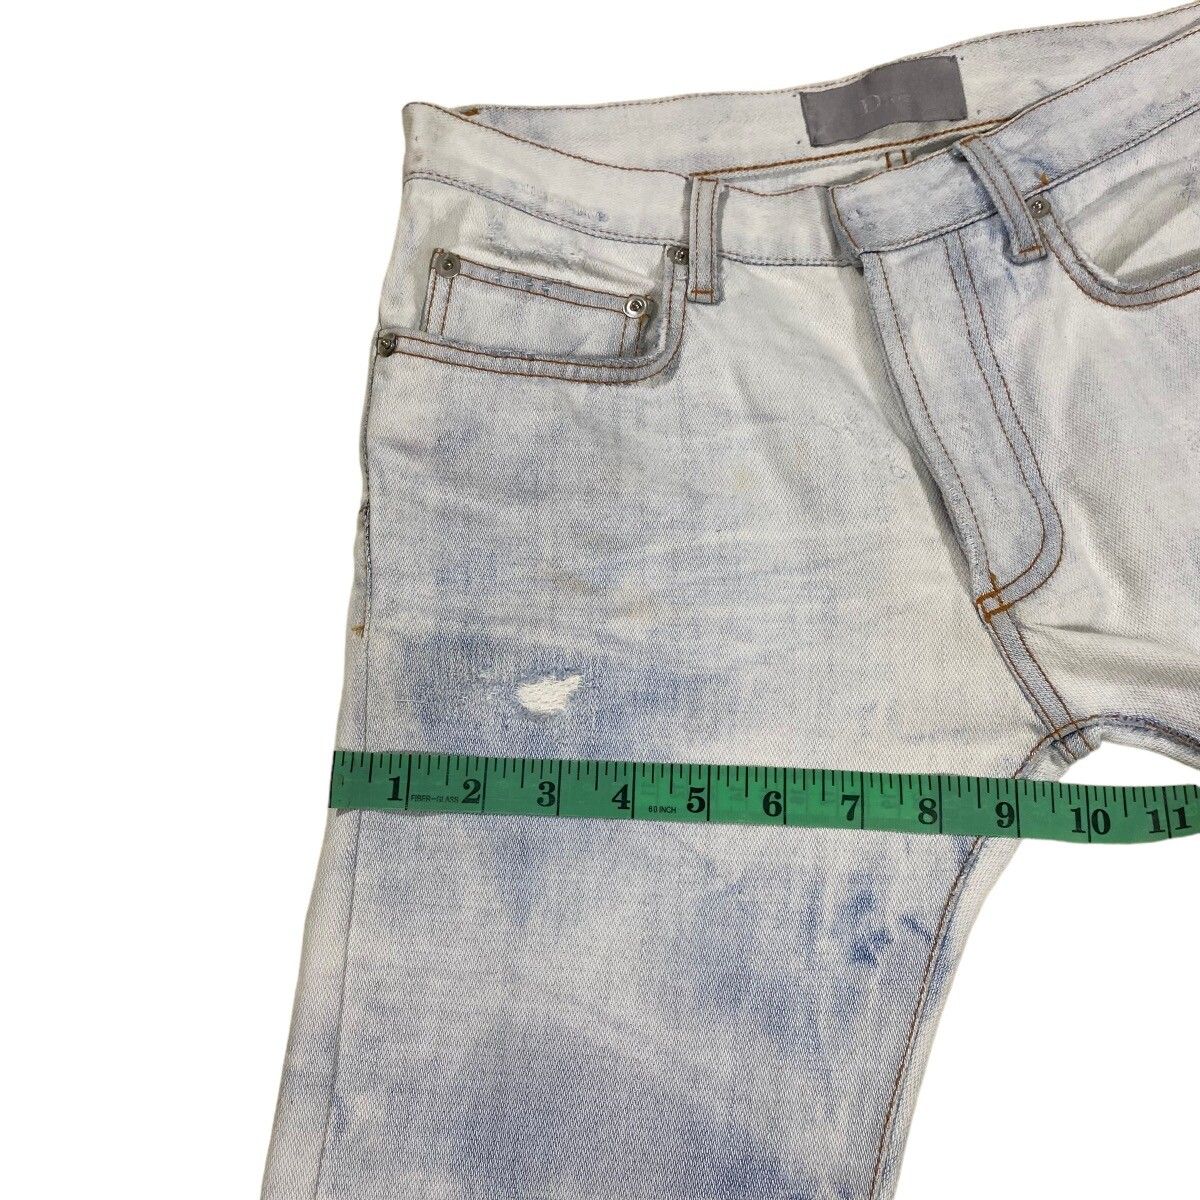 Dior Homme SS06 Dirty Snow Denim Jeans - 21